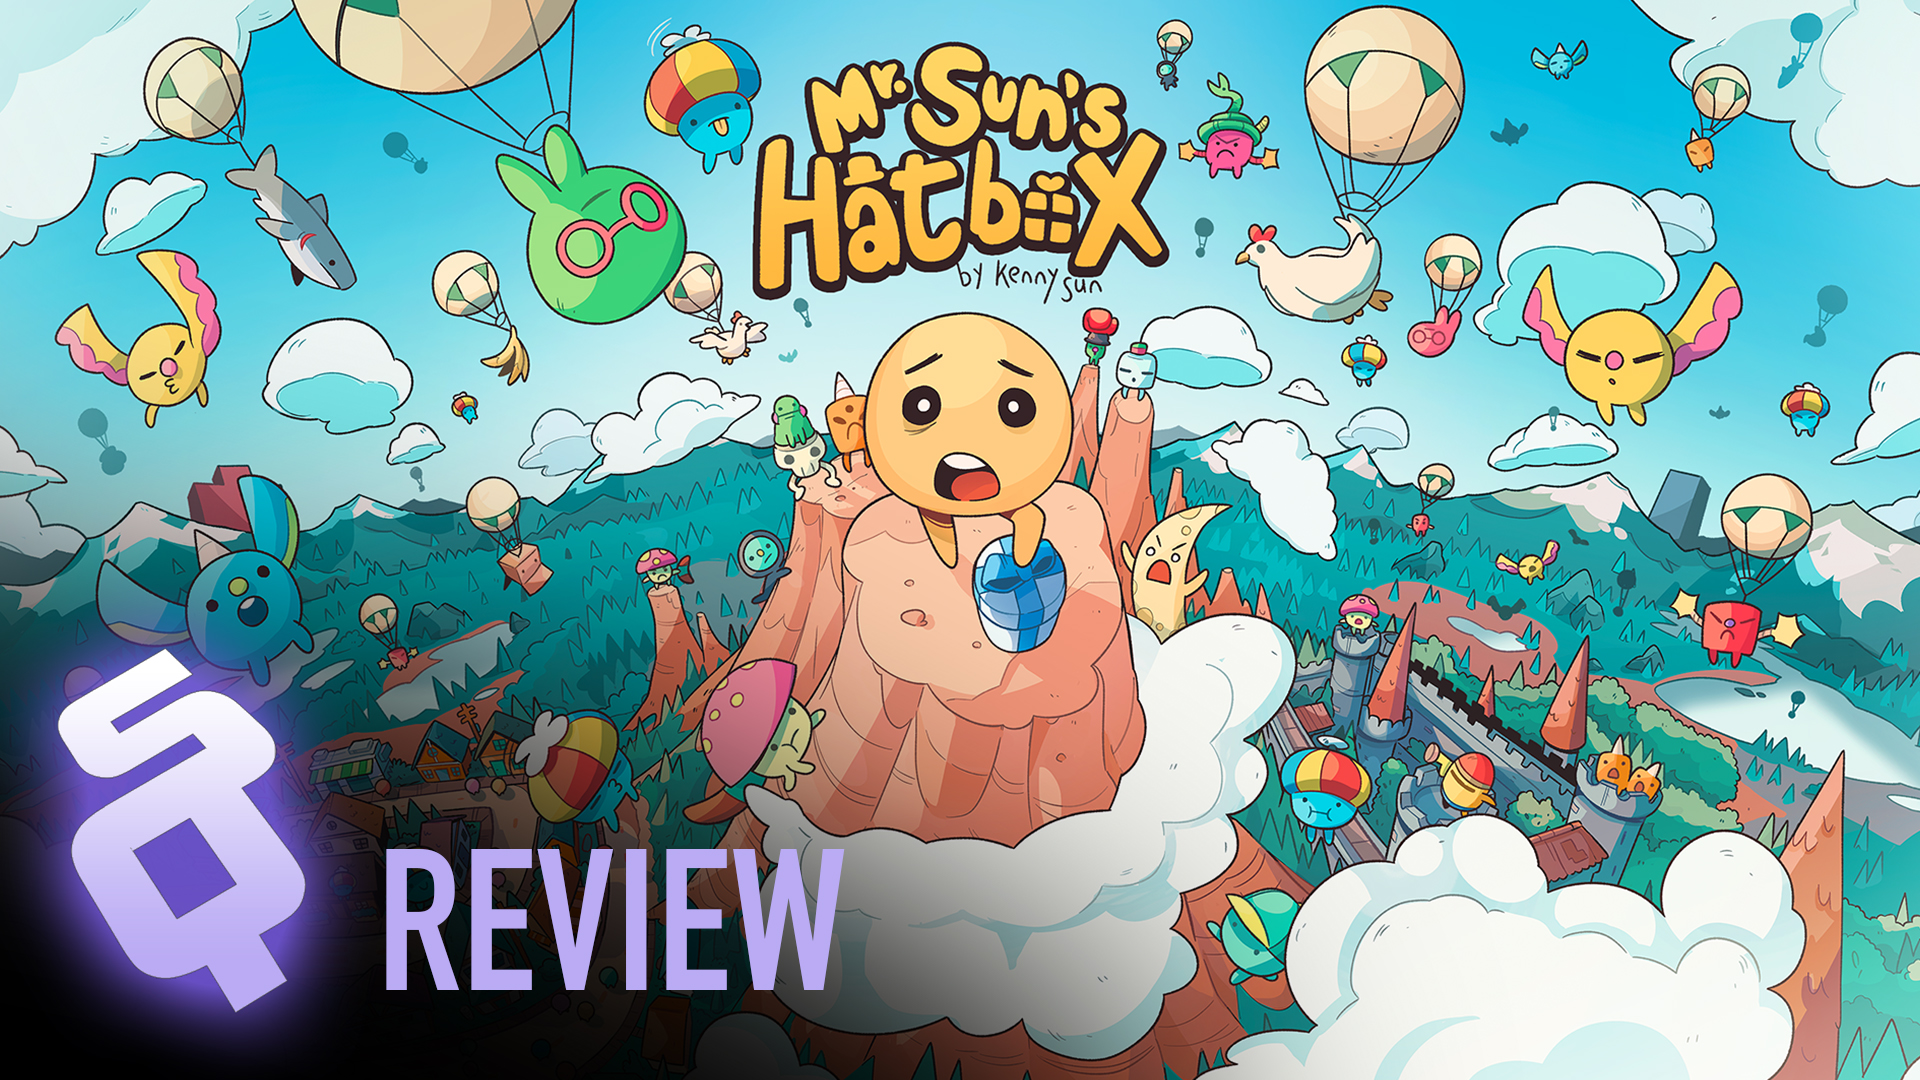 Mr Sun’s Hatbox review